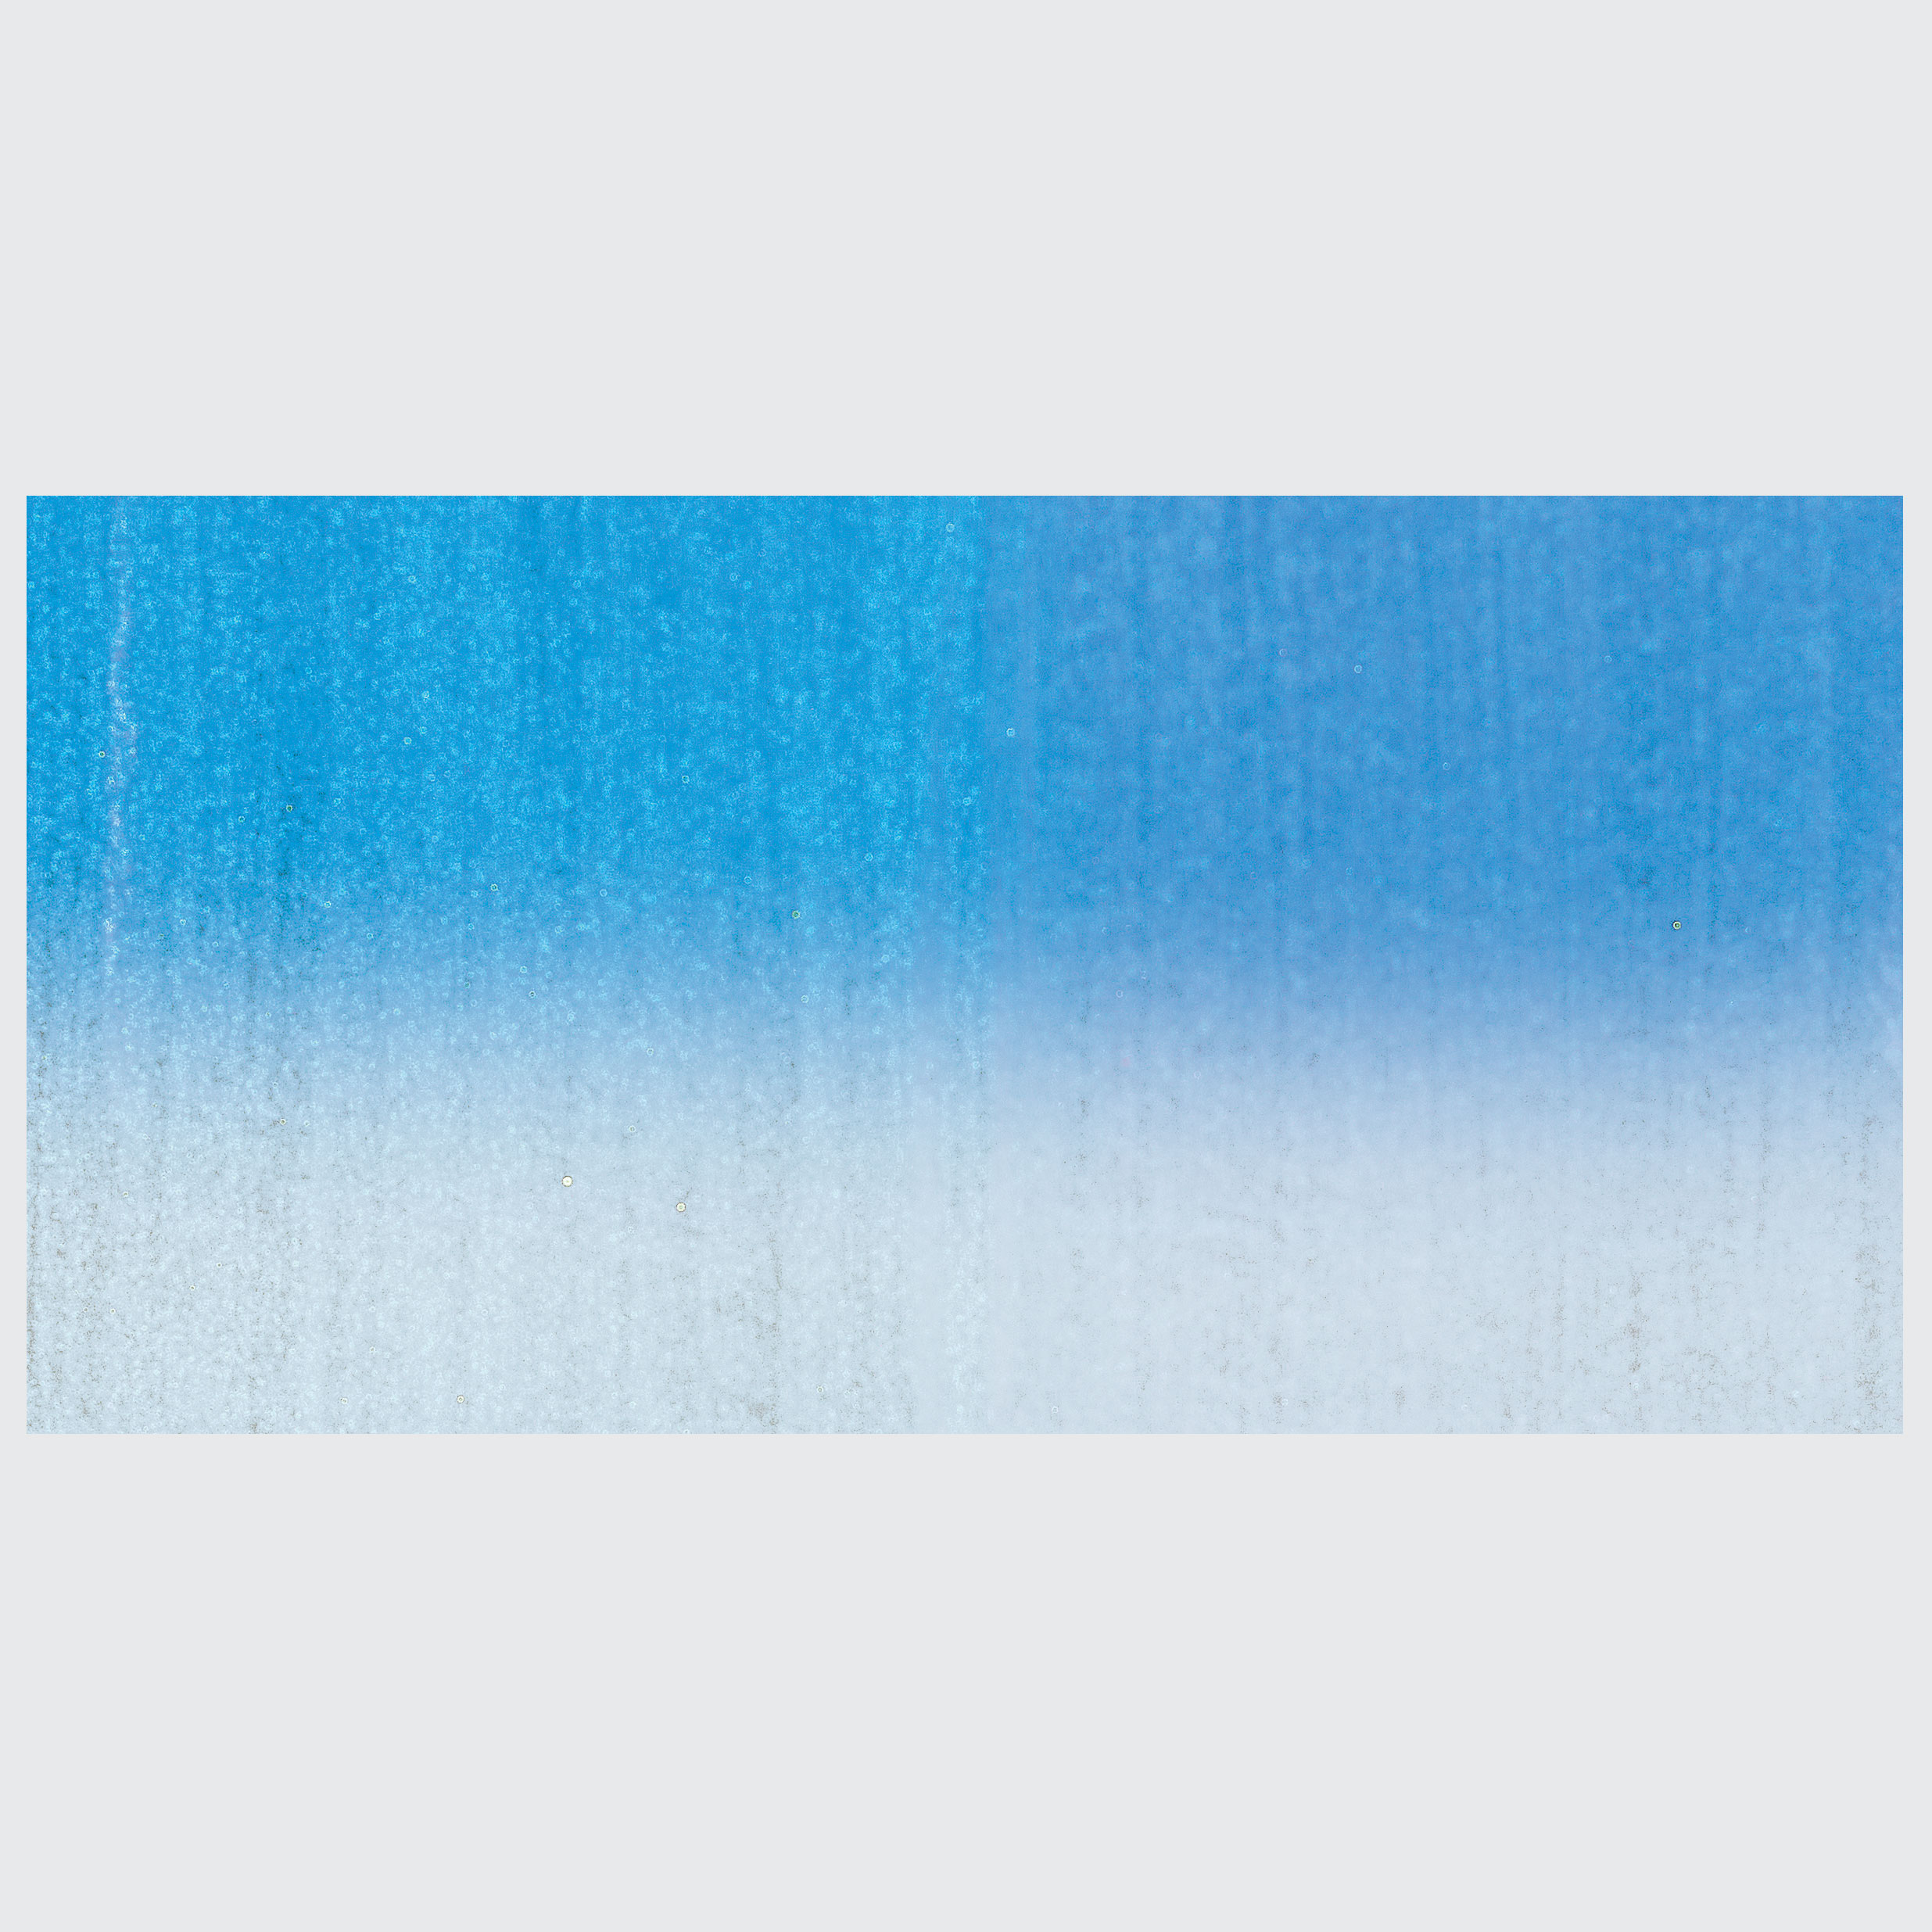 FolkArt Invisible Glow Acrylic Paint - Blue Beam, 2 oz